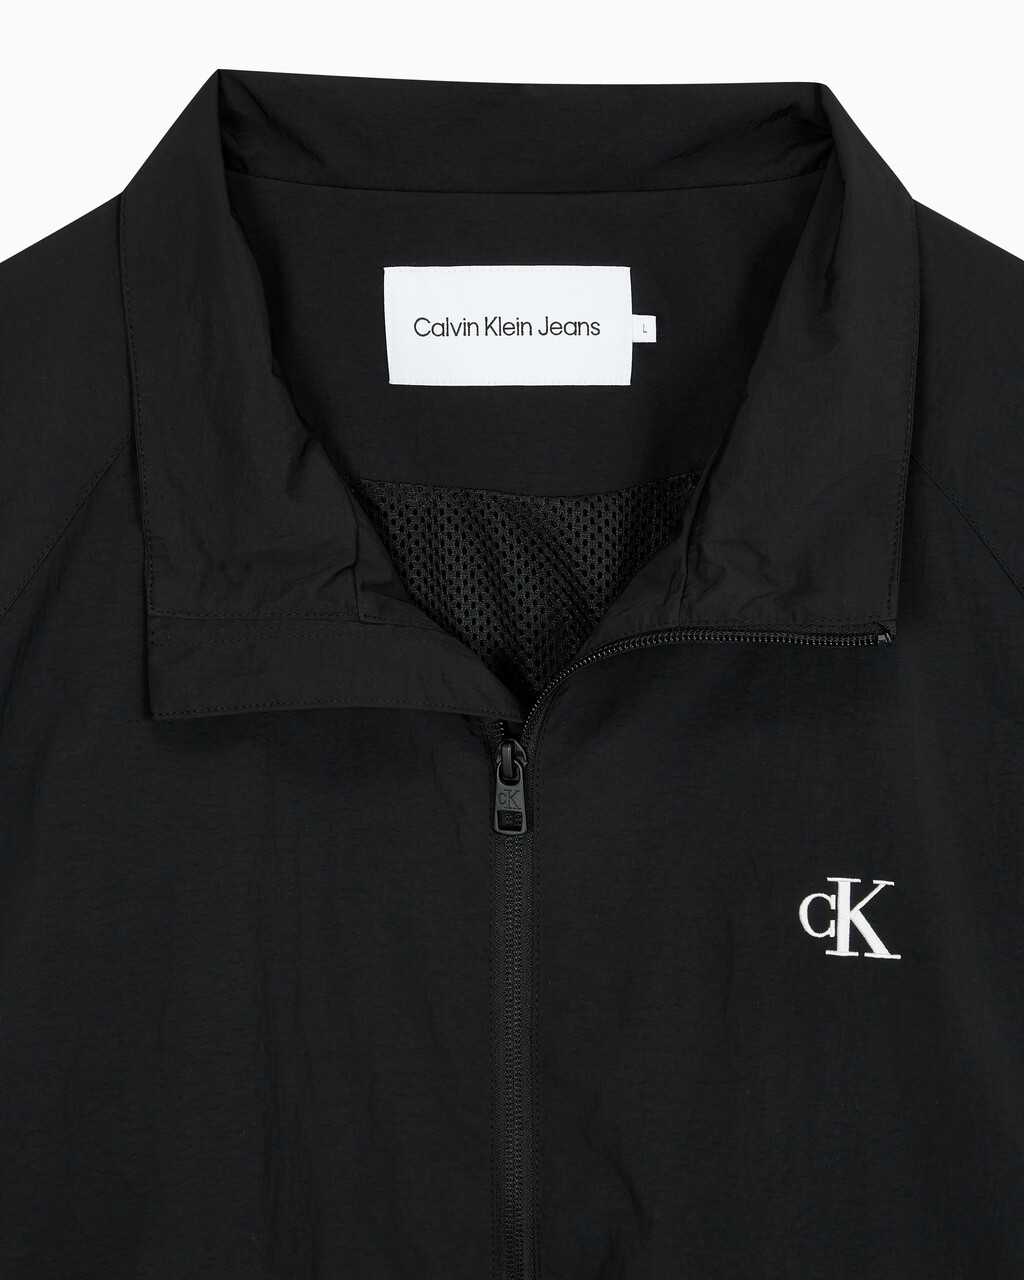 Buy 남성 에센셜 스탠드 카라 집업 자켓 in color CK BLACK